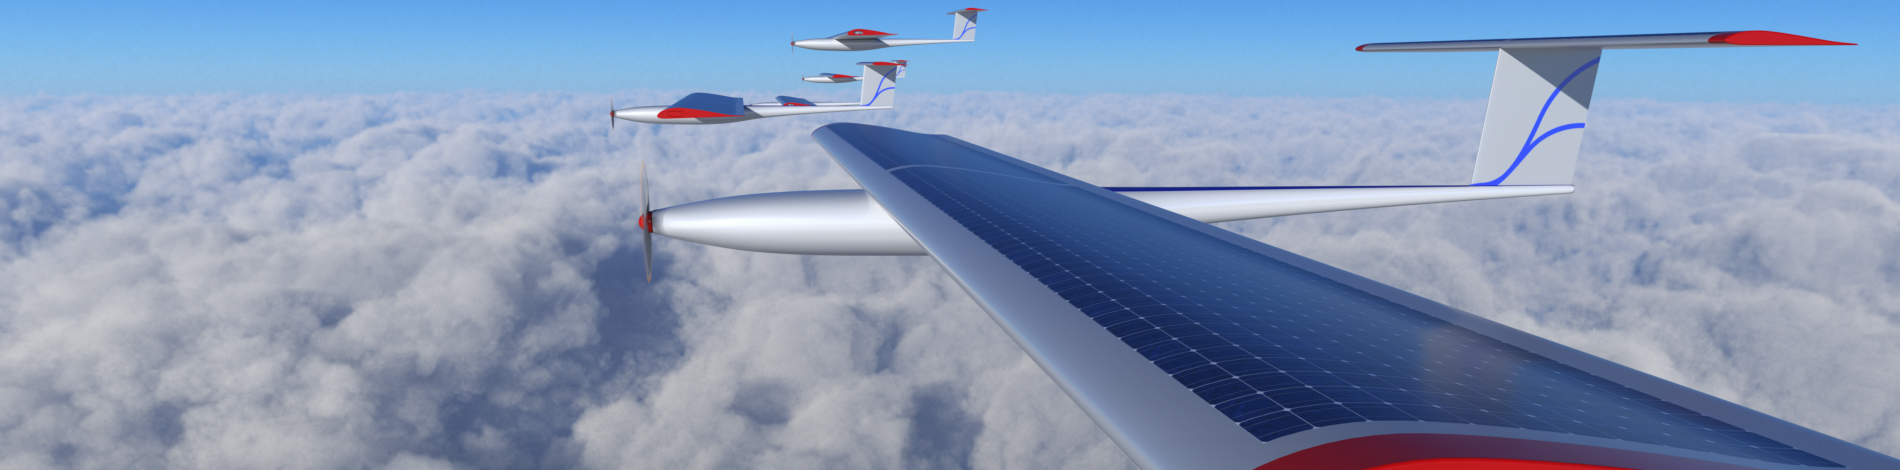 3D visualization of dockable drones alphalink